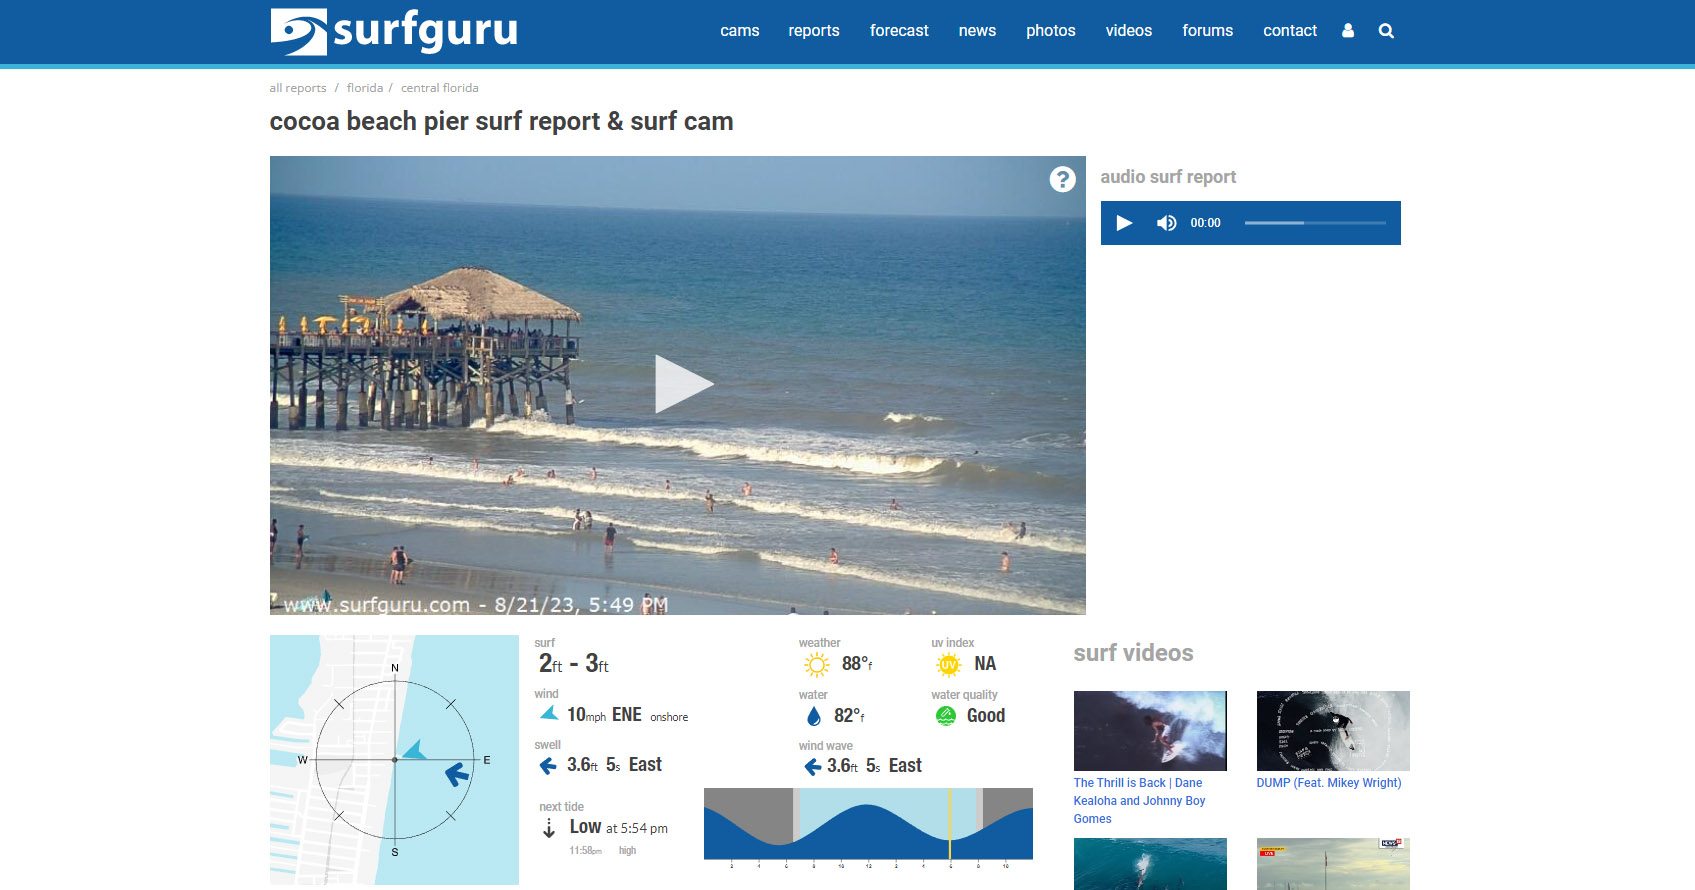 SURF GURU - COCOA BEACH PIER SURF REPORT